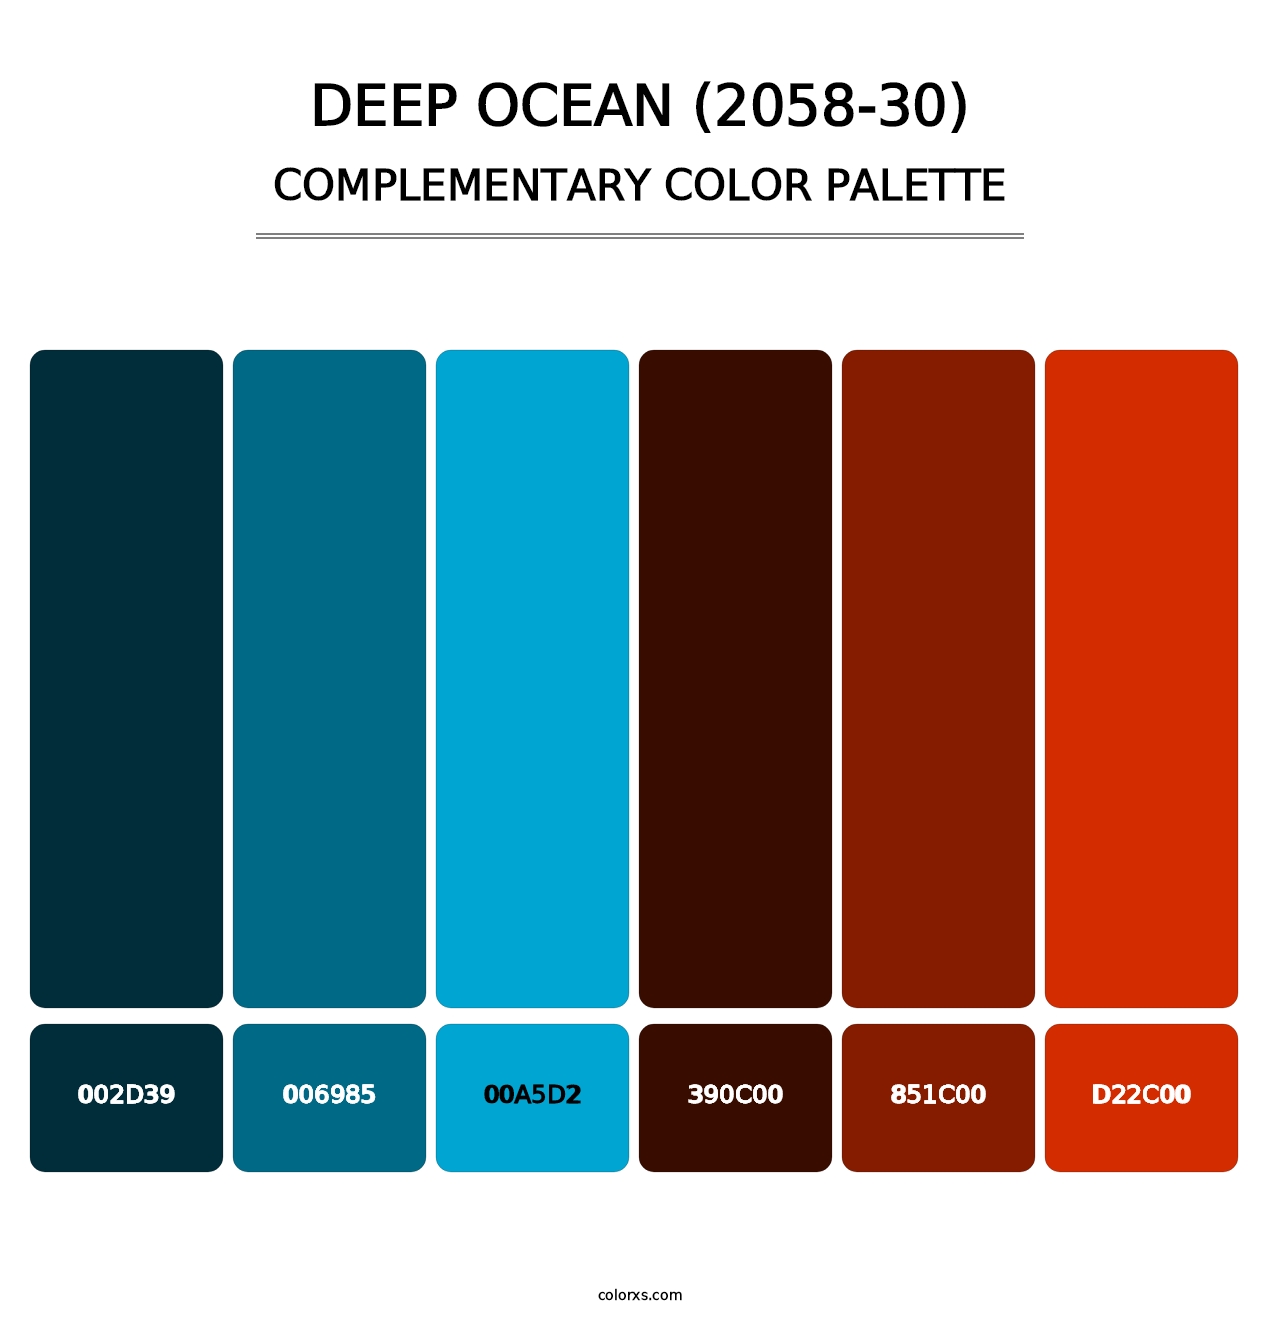 Deep Ocean (2058-30) - Complementary Color Palette